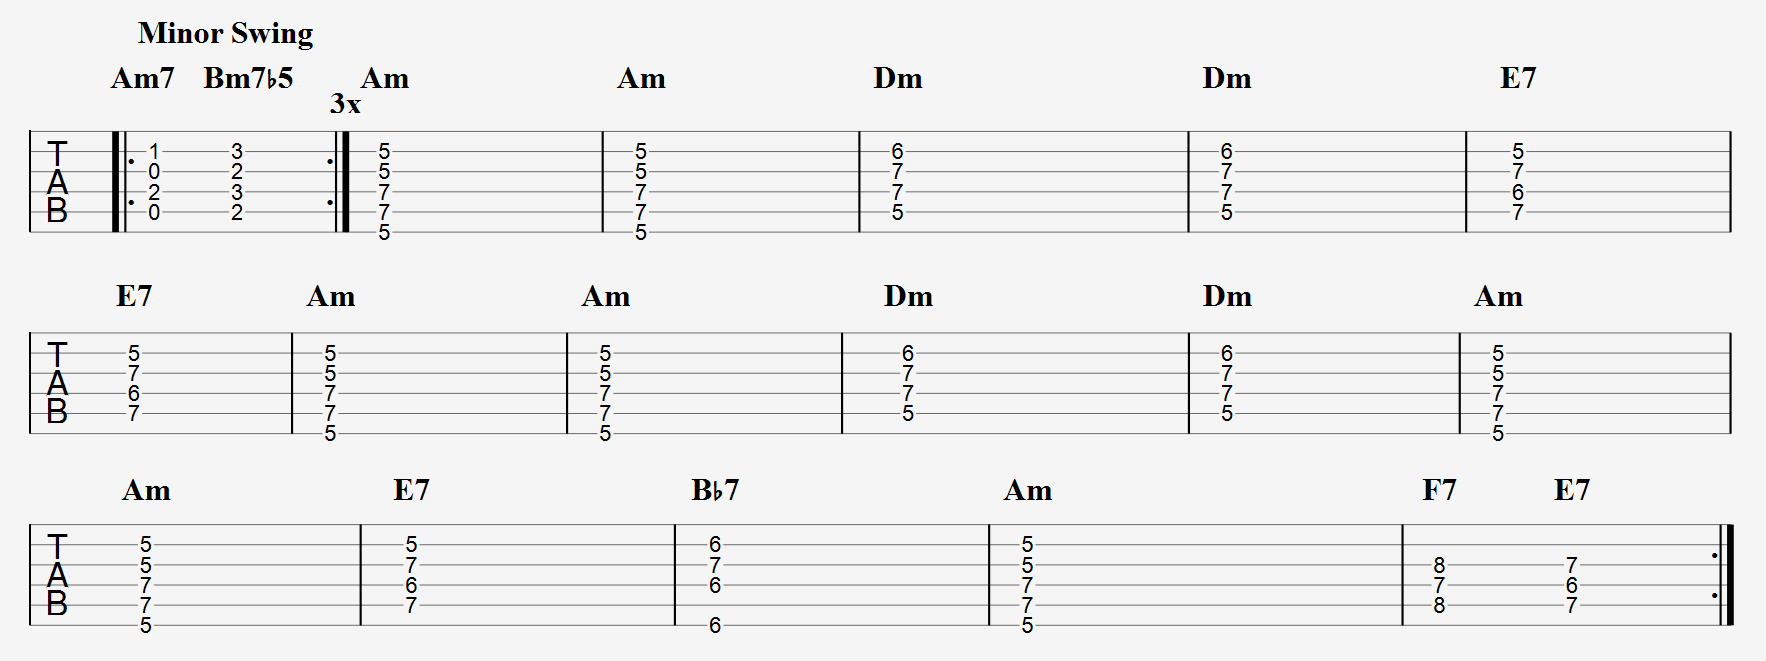 Minor Swing jazz chord progressions